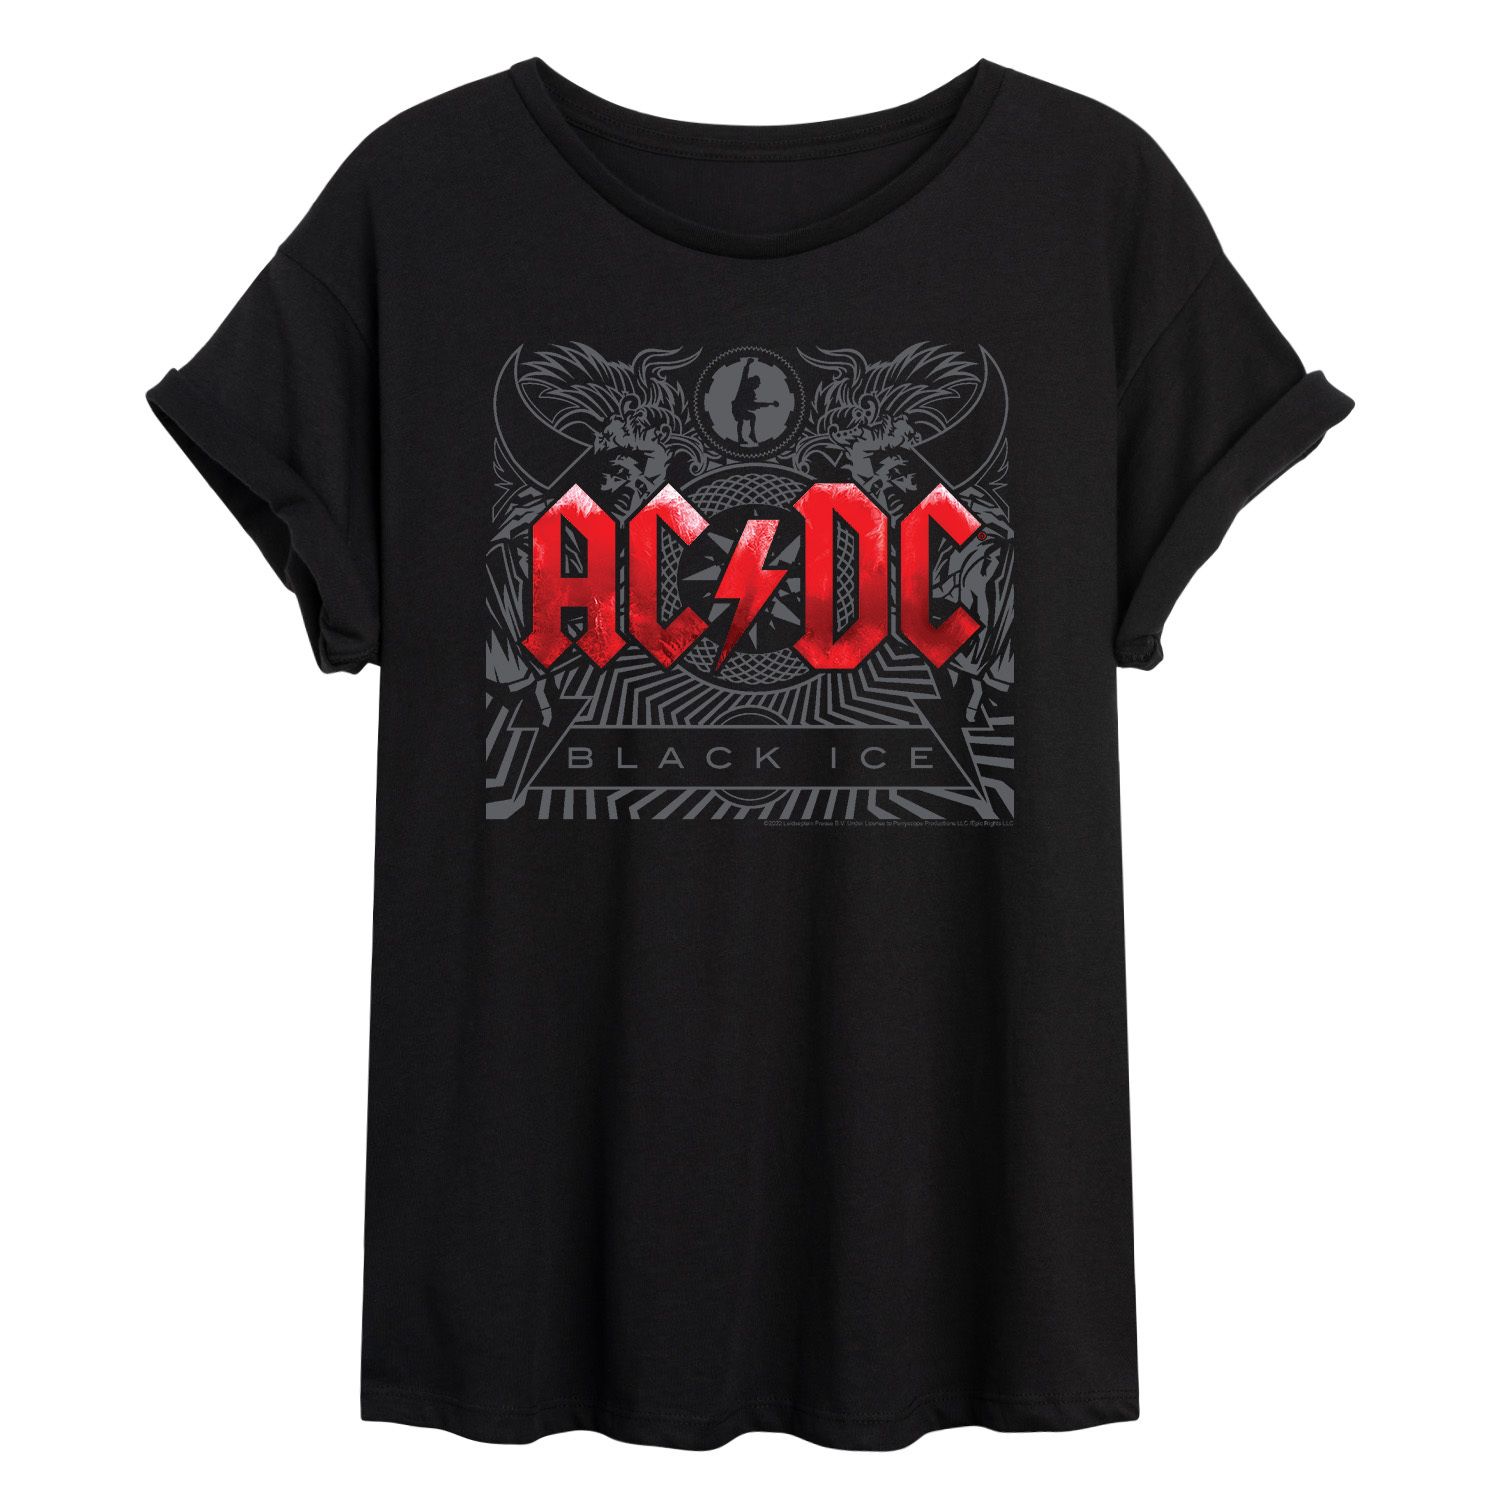 Детская футболка AC/DC Black Ice с струящимся рисунком Licensed Character ac dc black ice 2 lp